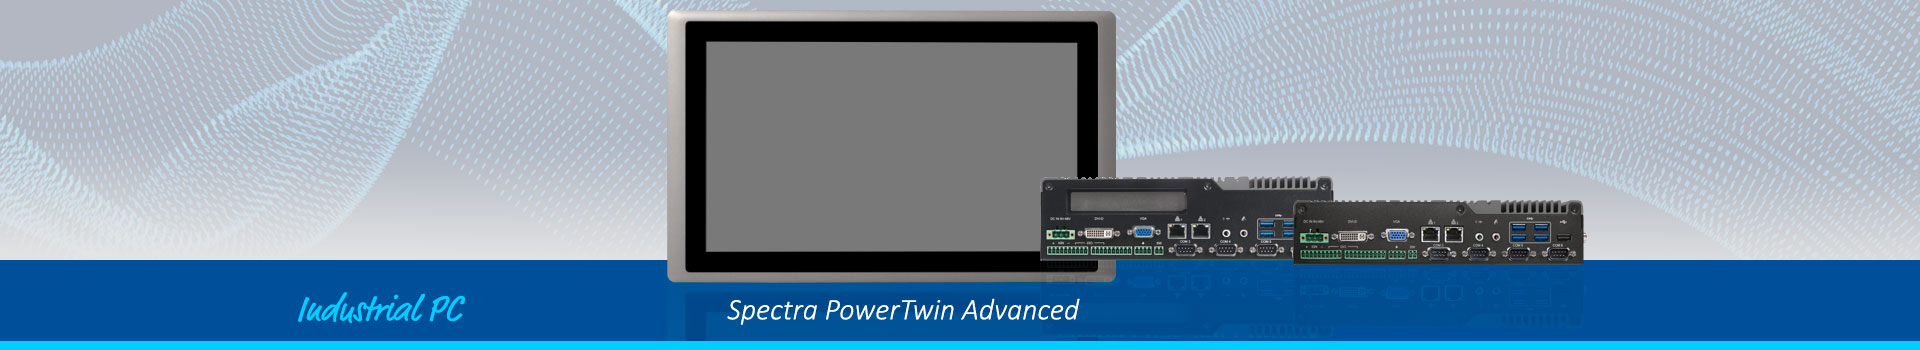 Banner Panel PC PowerTwin Advanced